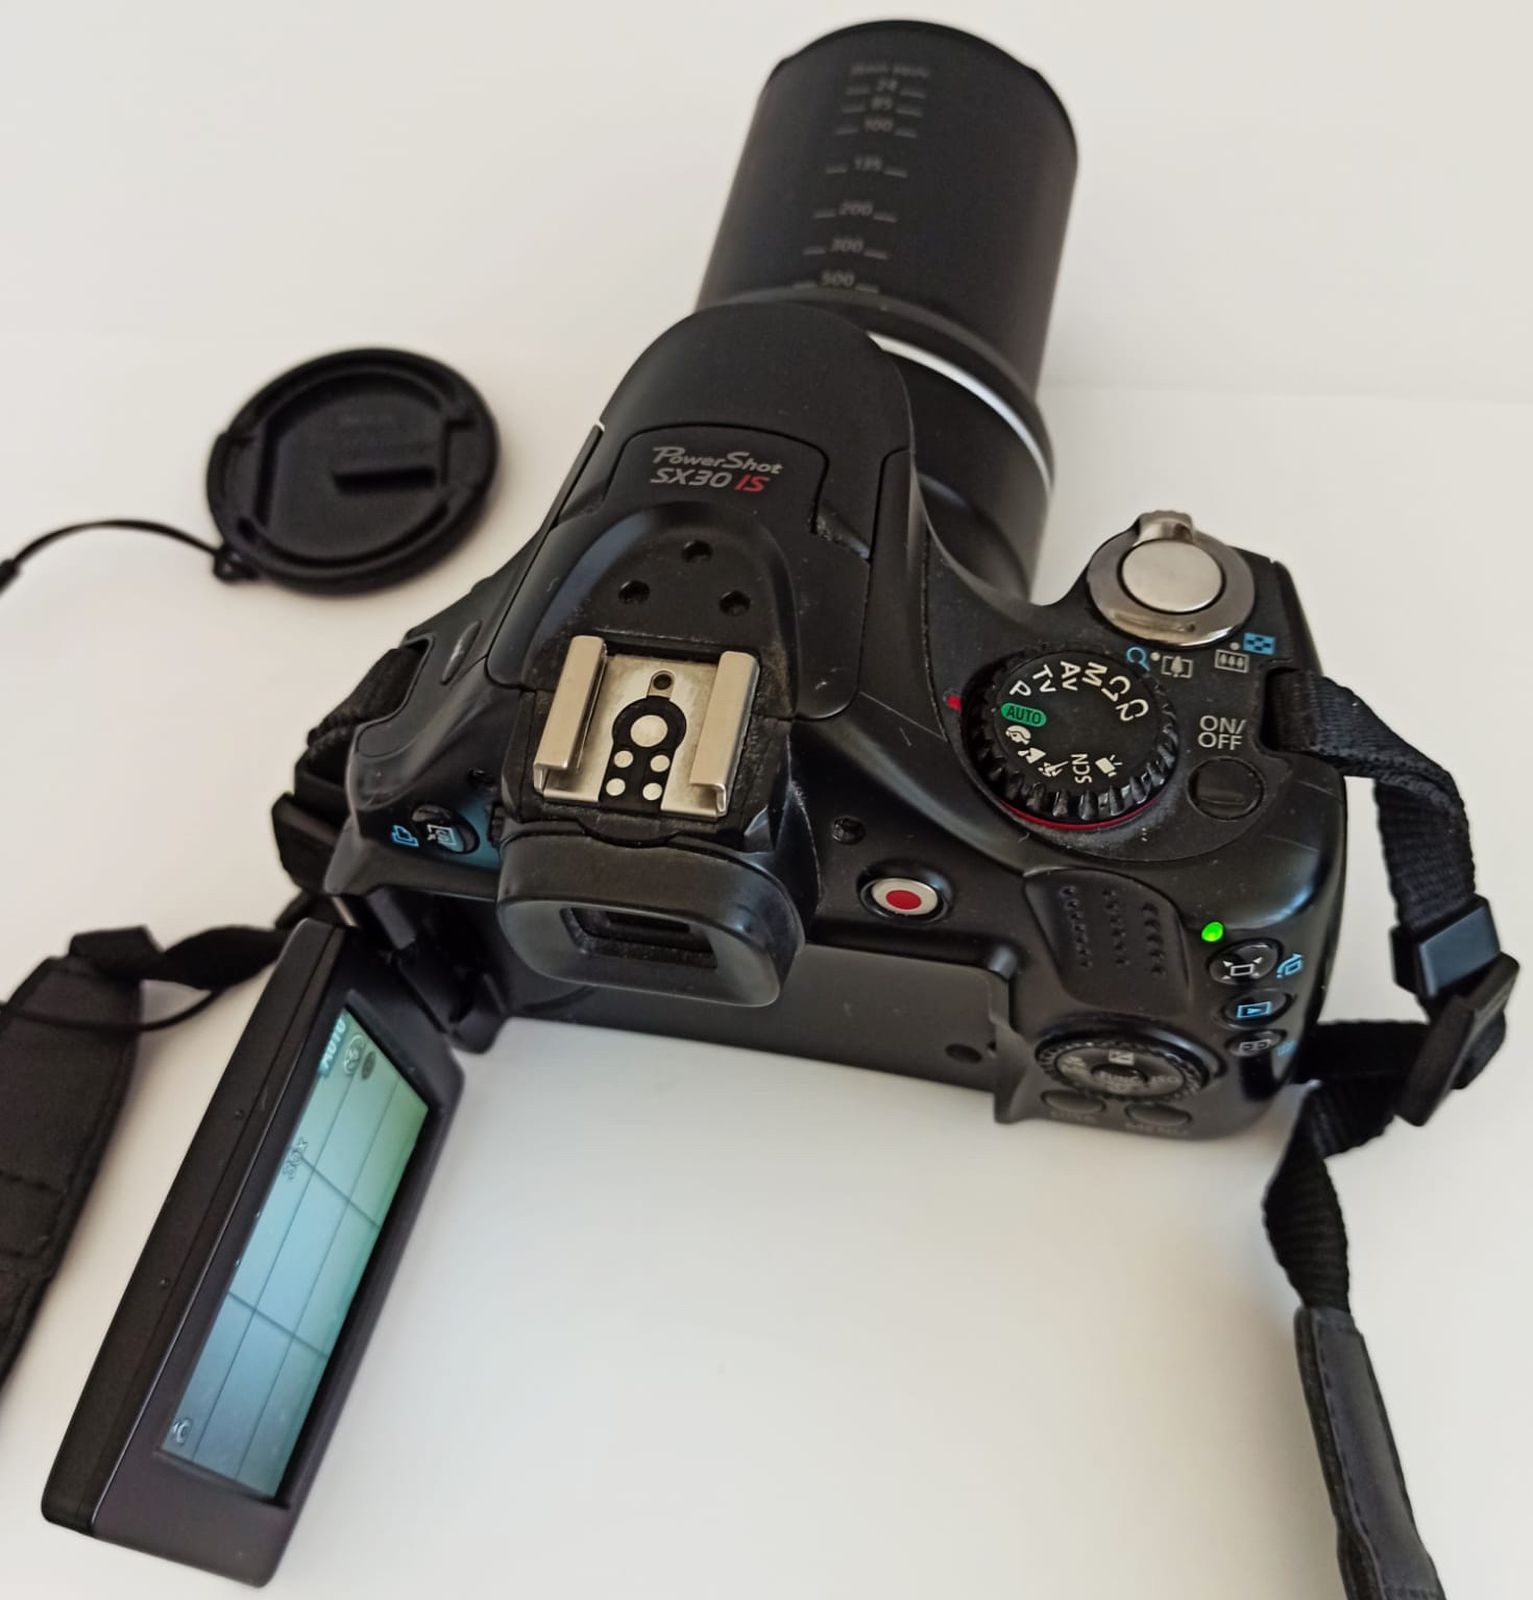 Like New Cannon Powershoy Sx30 Digital Camera With 35x Optical Zoom